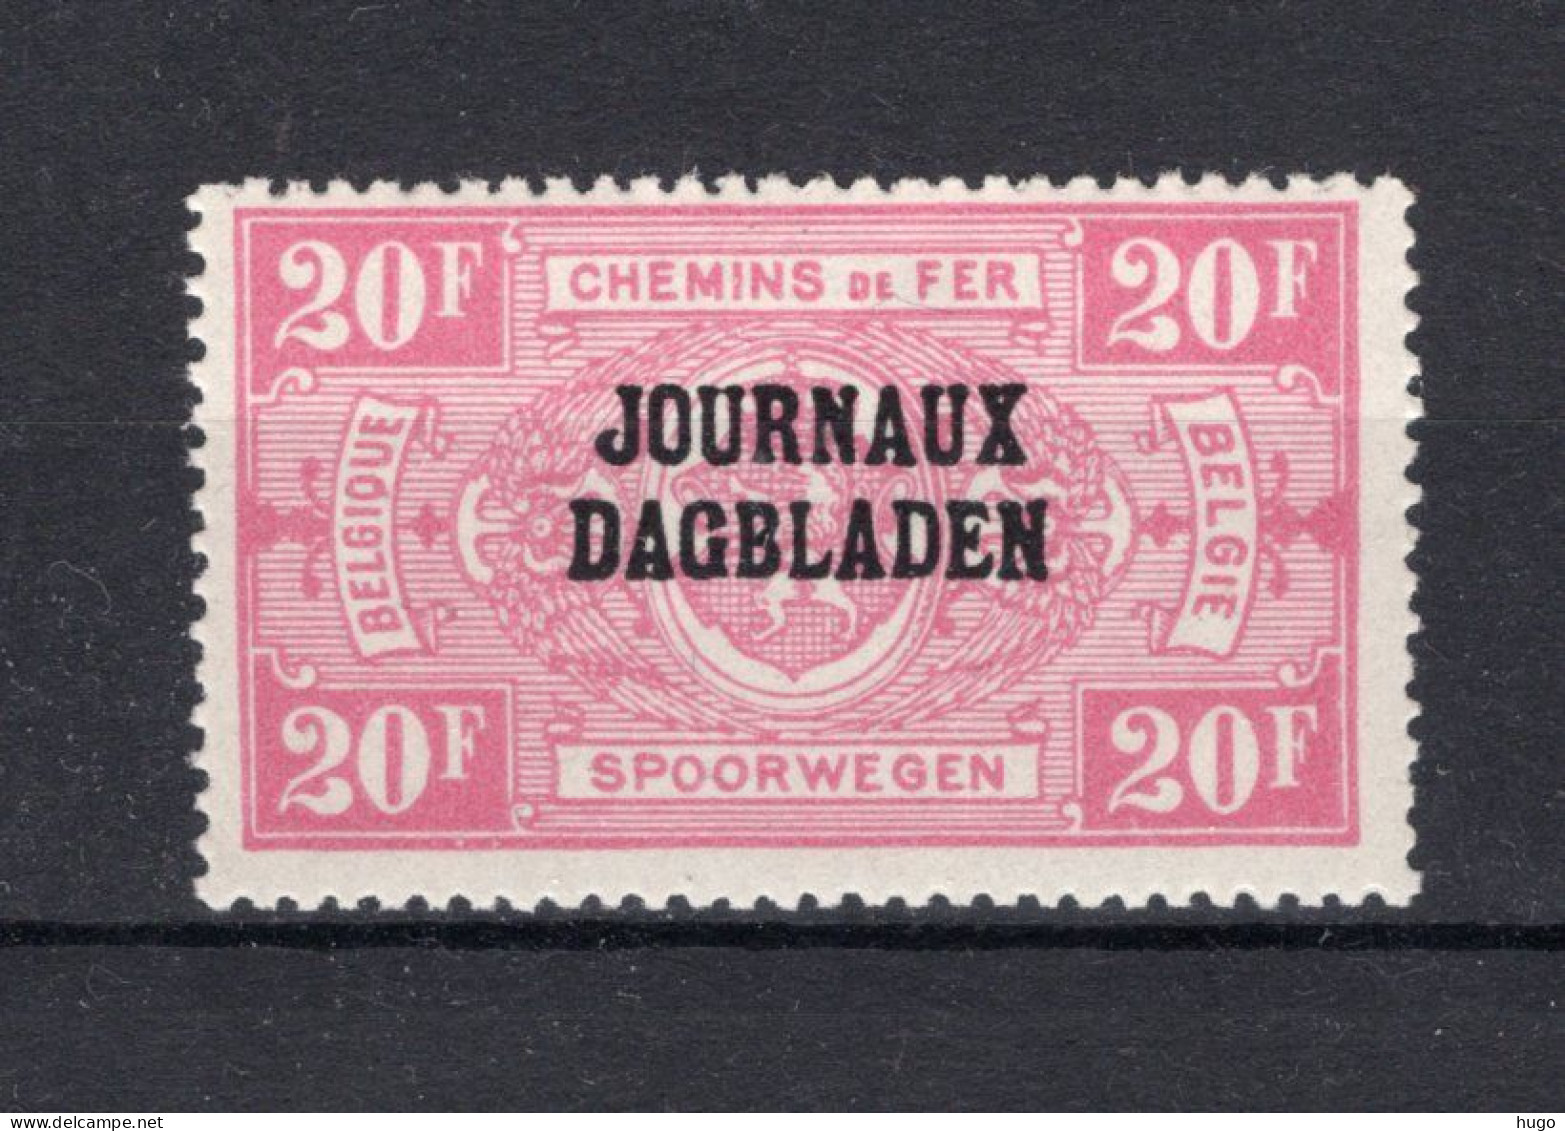 JO36 MNH** 1929 - Type I, R Staat Boven BL - Sot - Dagbladzegels [JO]